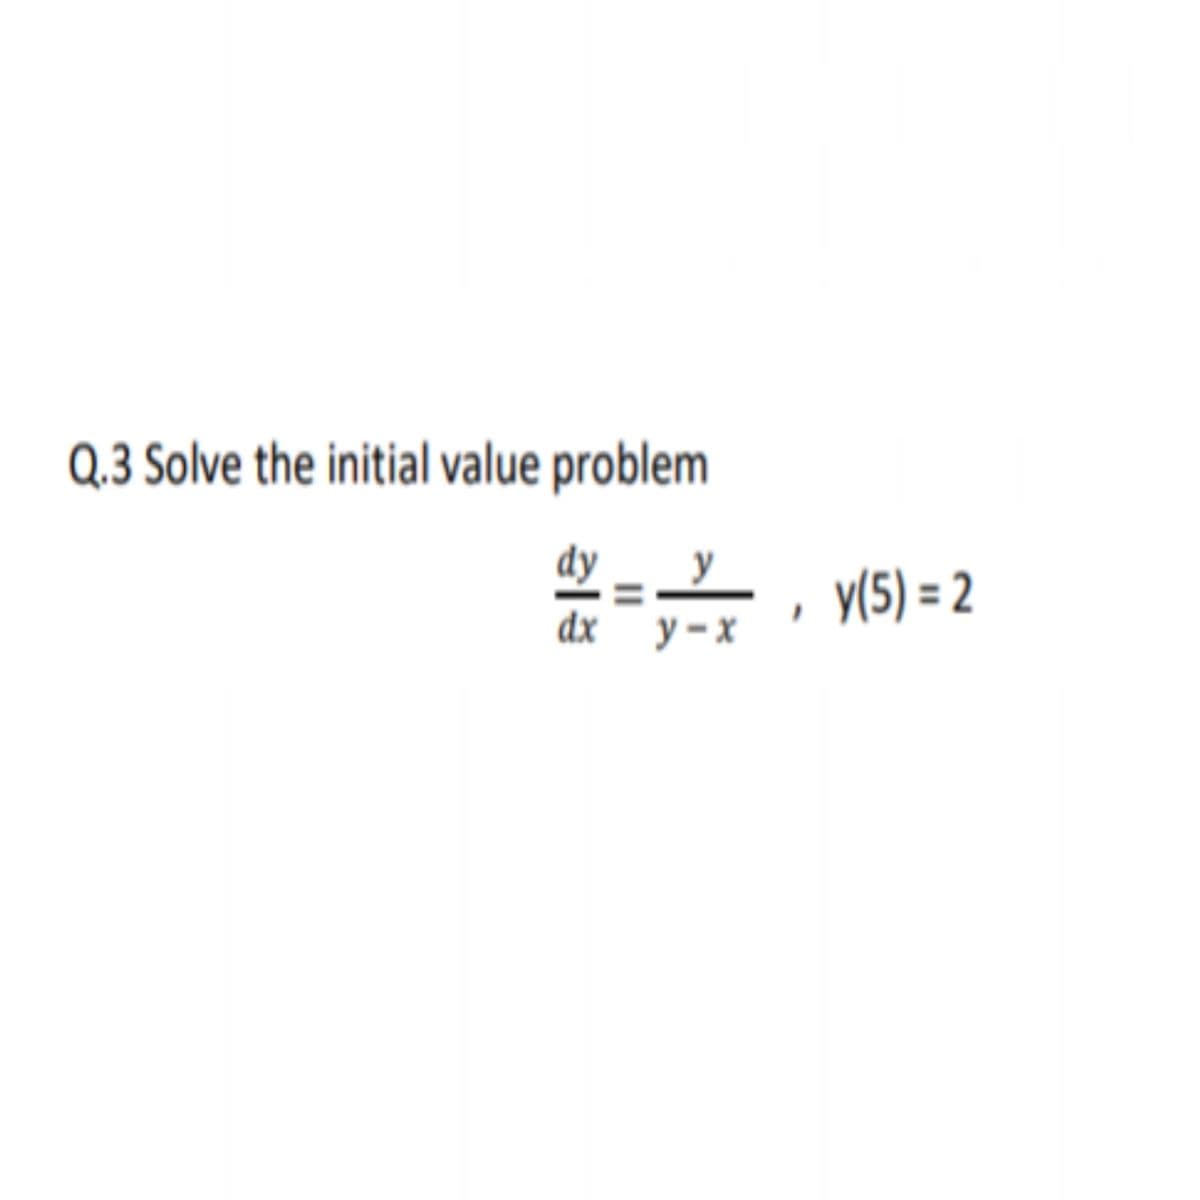 Q.3 Solve the initial value problem
dy
dx y-x
y
y(5) = 2
II
